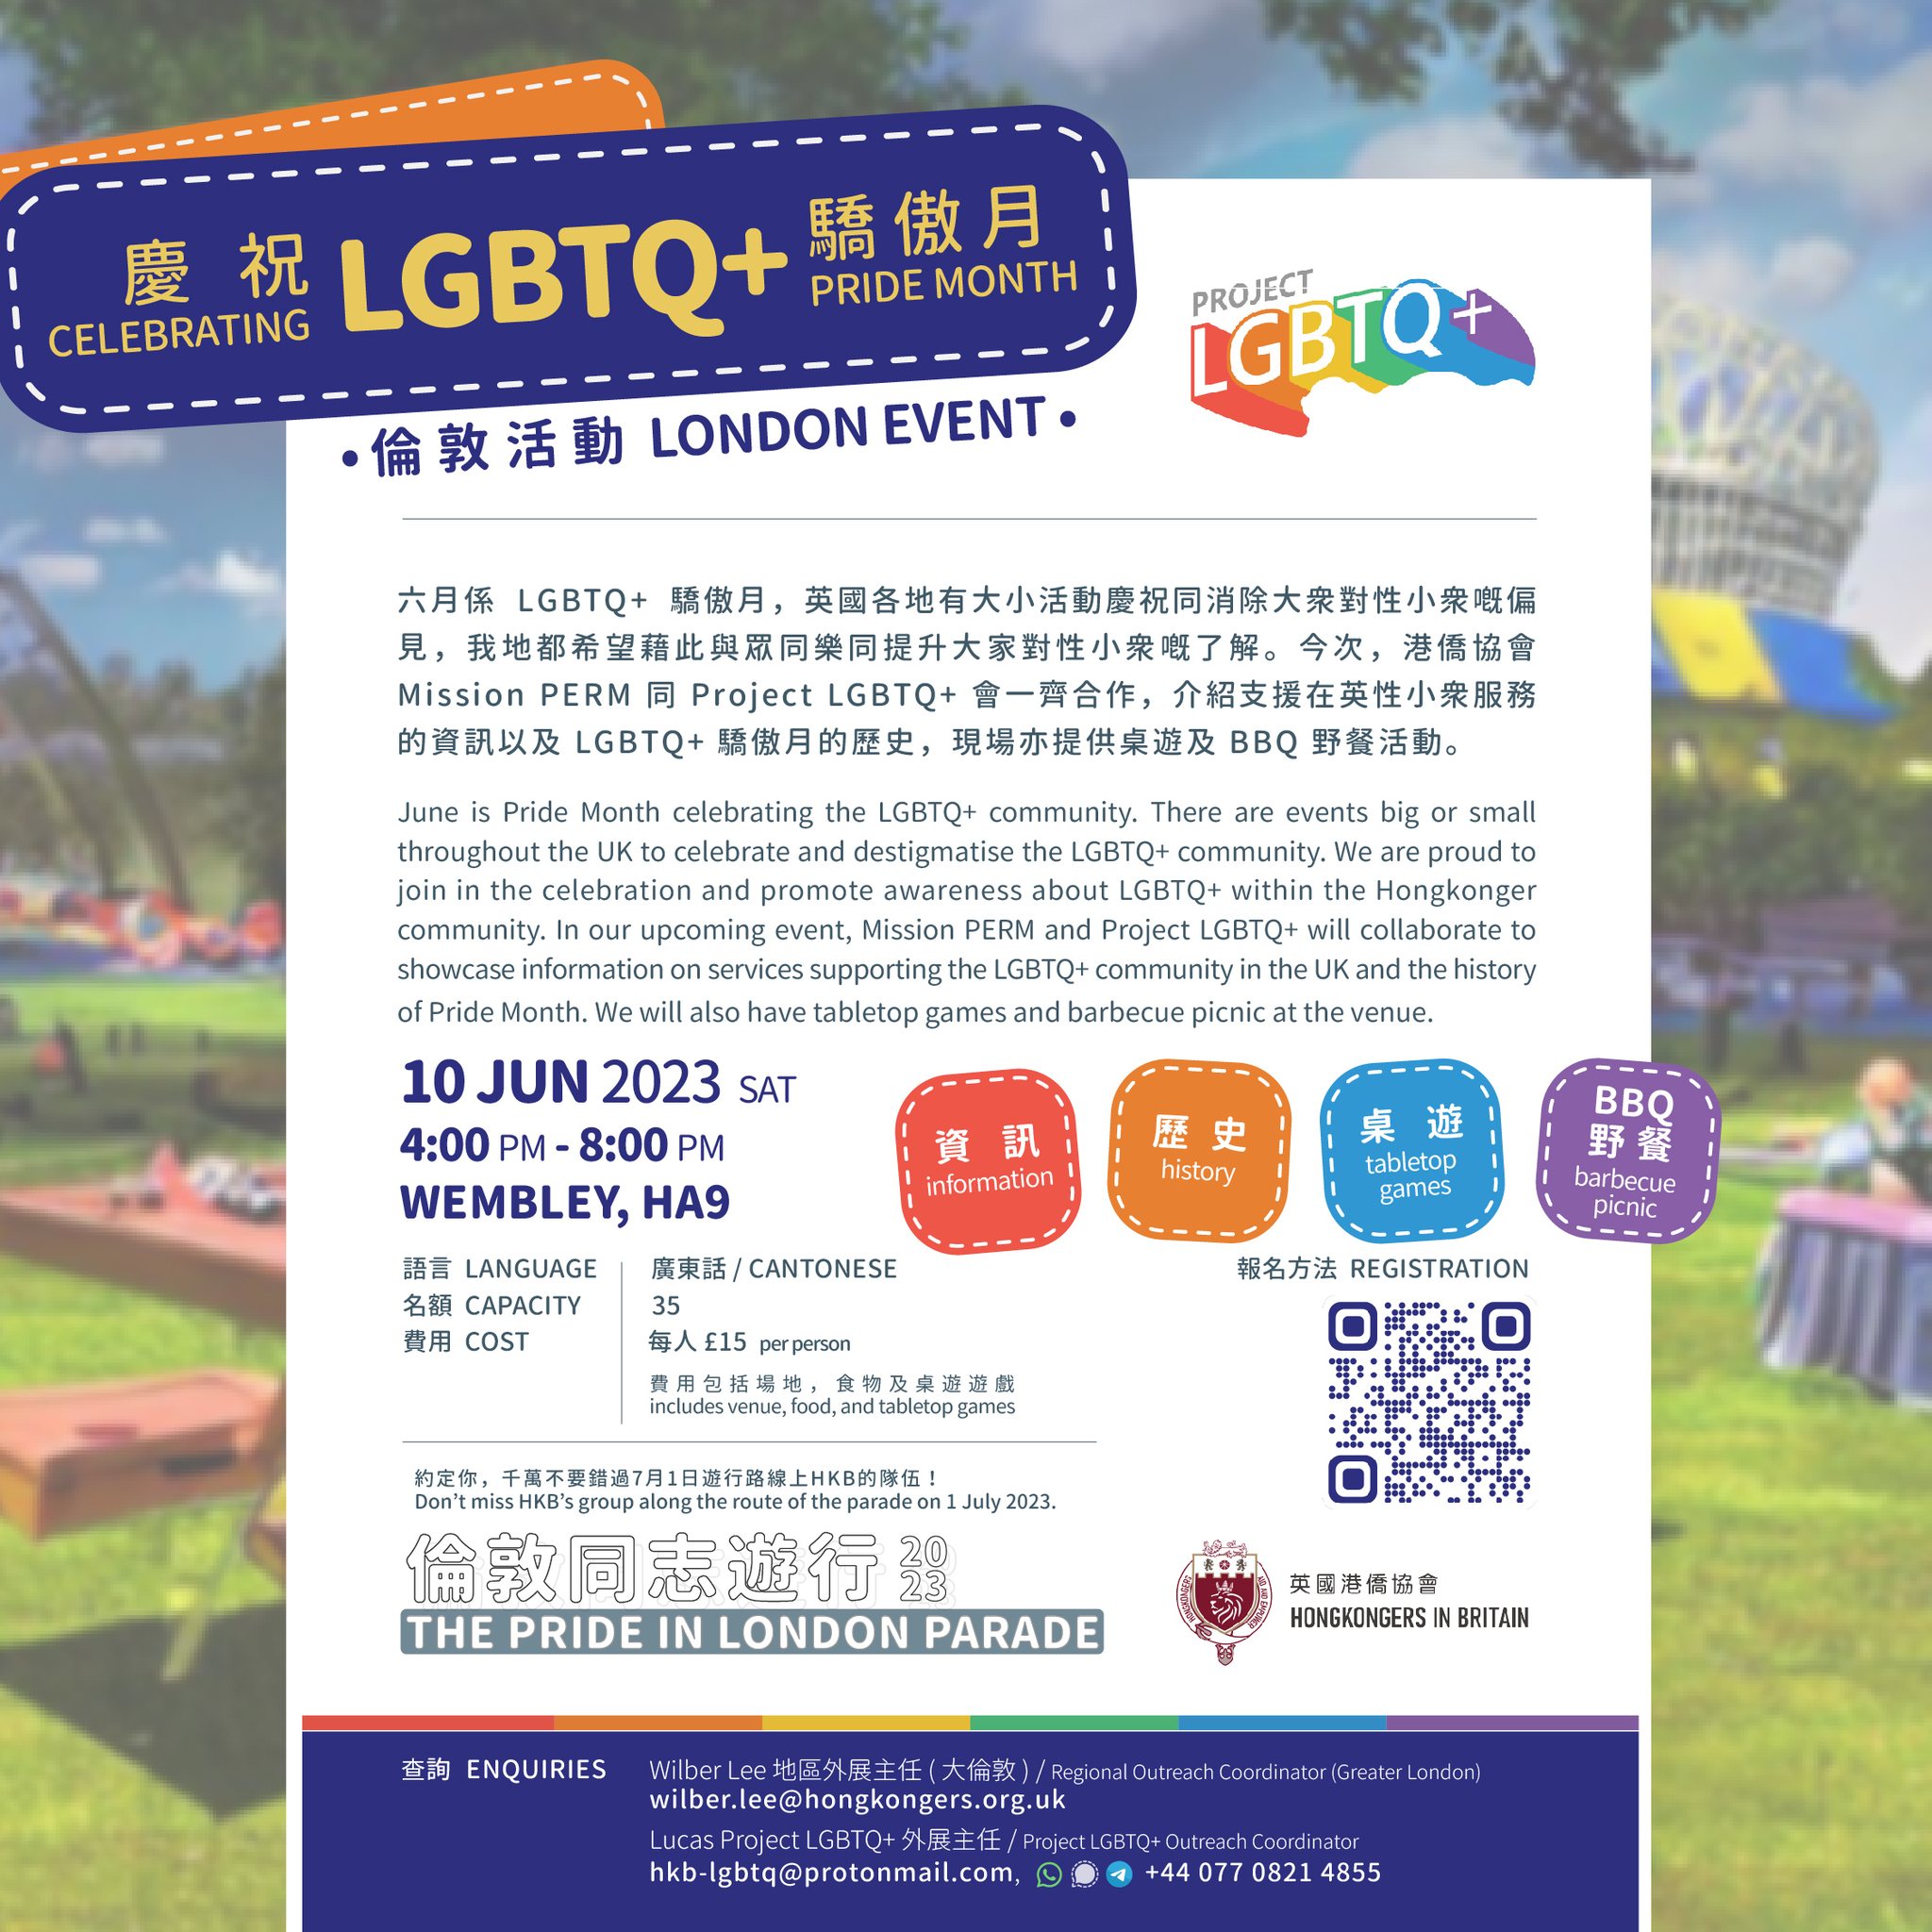 Celebrating LGBTQ+ Pride Month